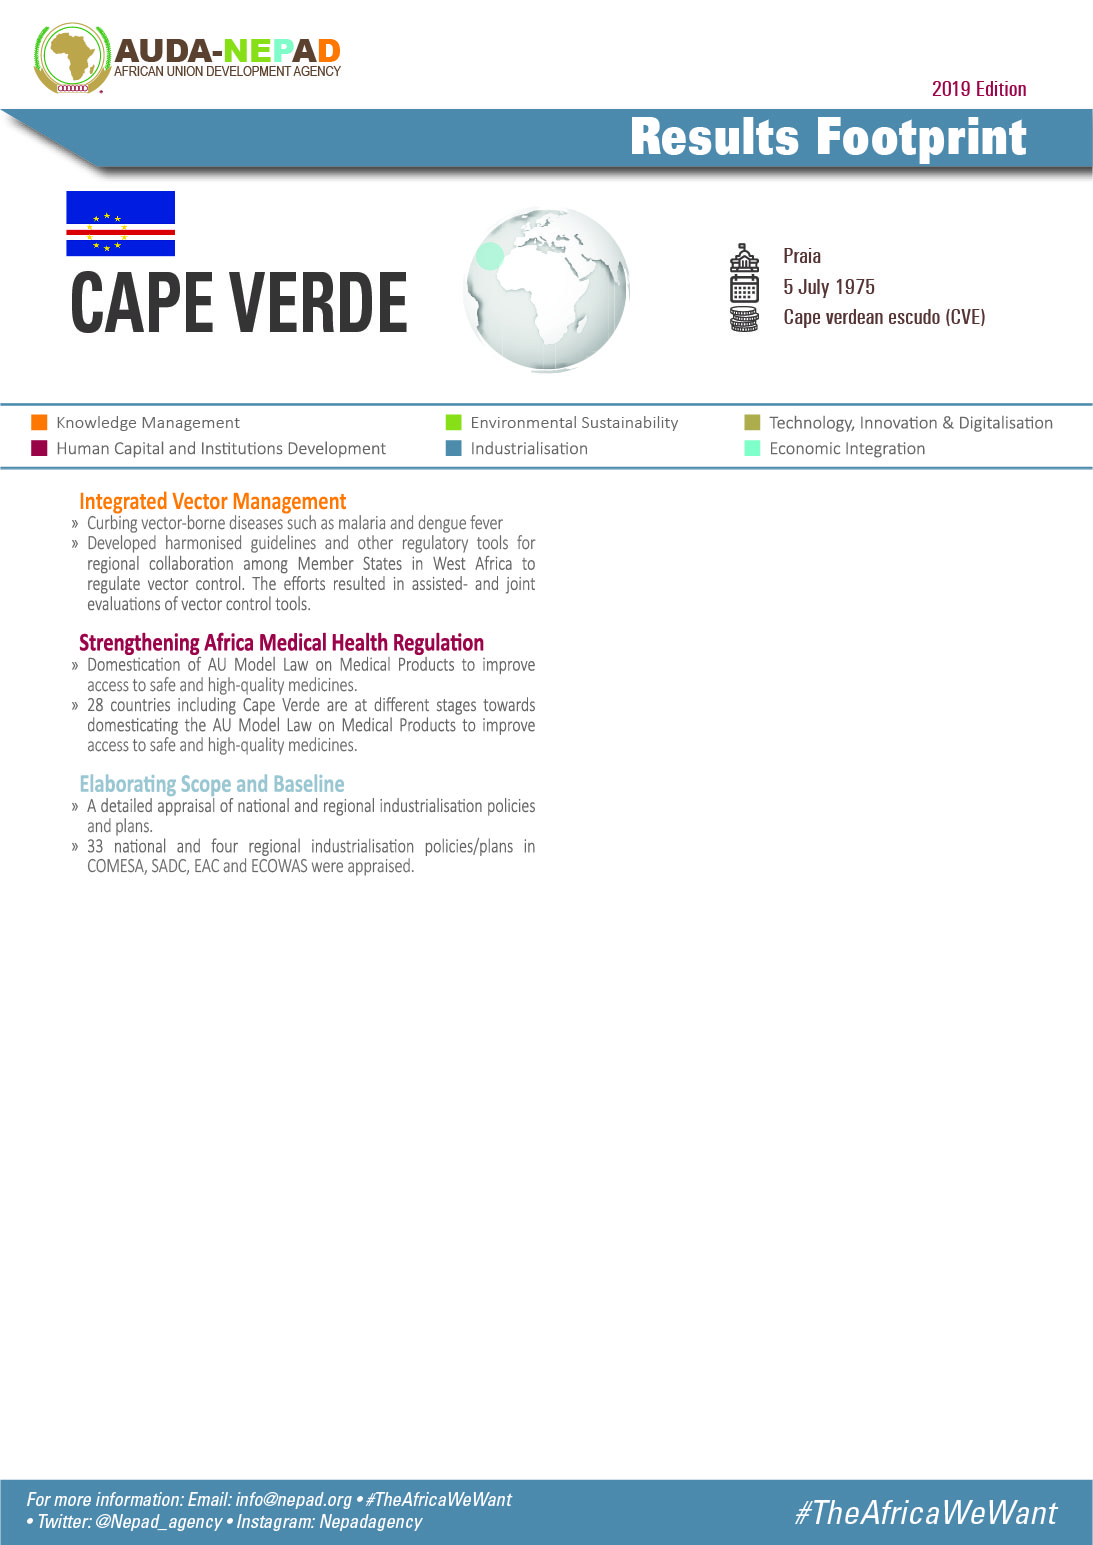 2019 AUDA-NEPAD Footprint: Country Profiles: Cape Verde